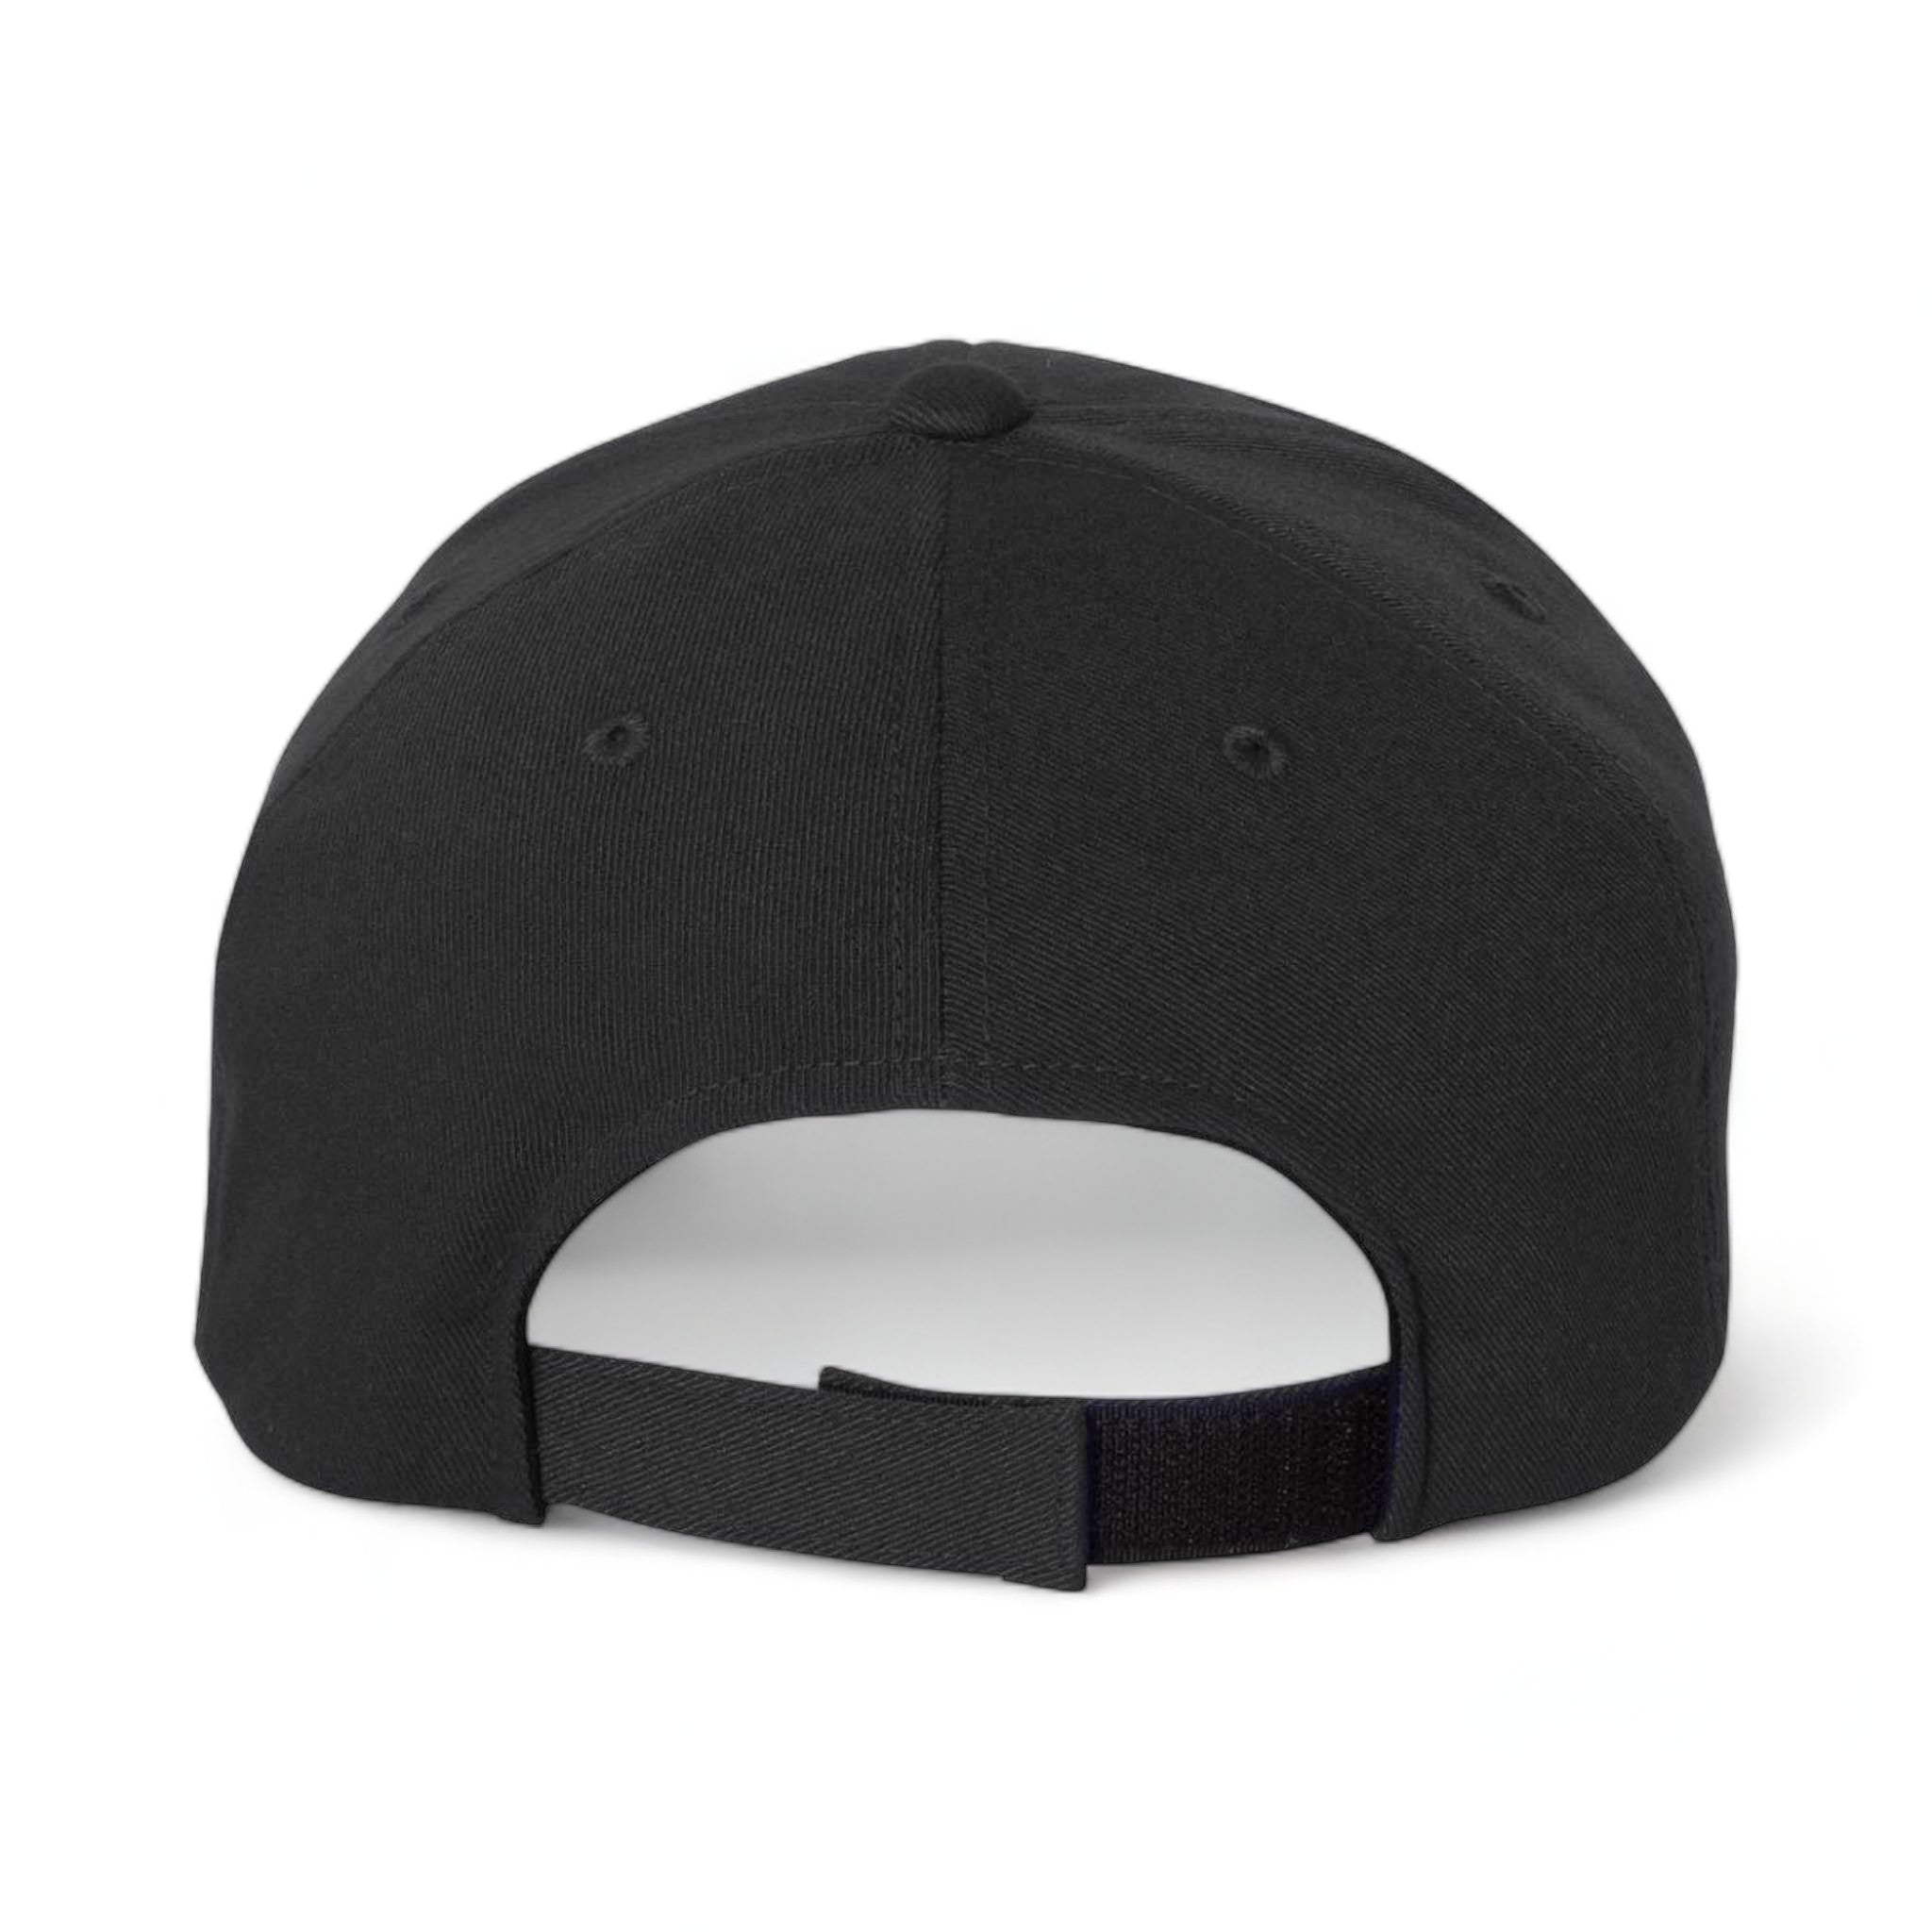 Back view of Flexfit 110C custom hat in black